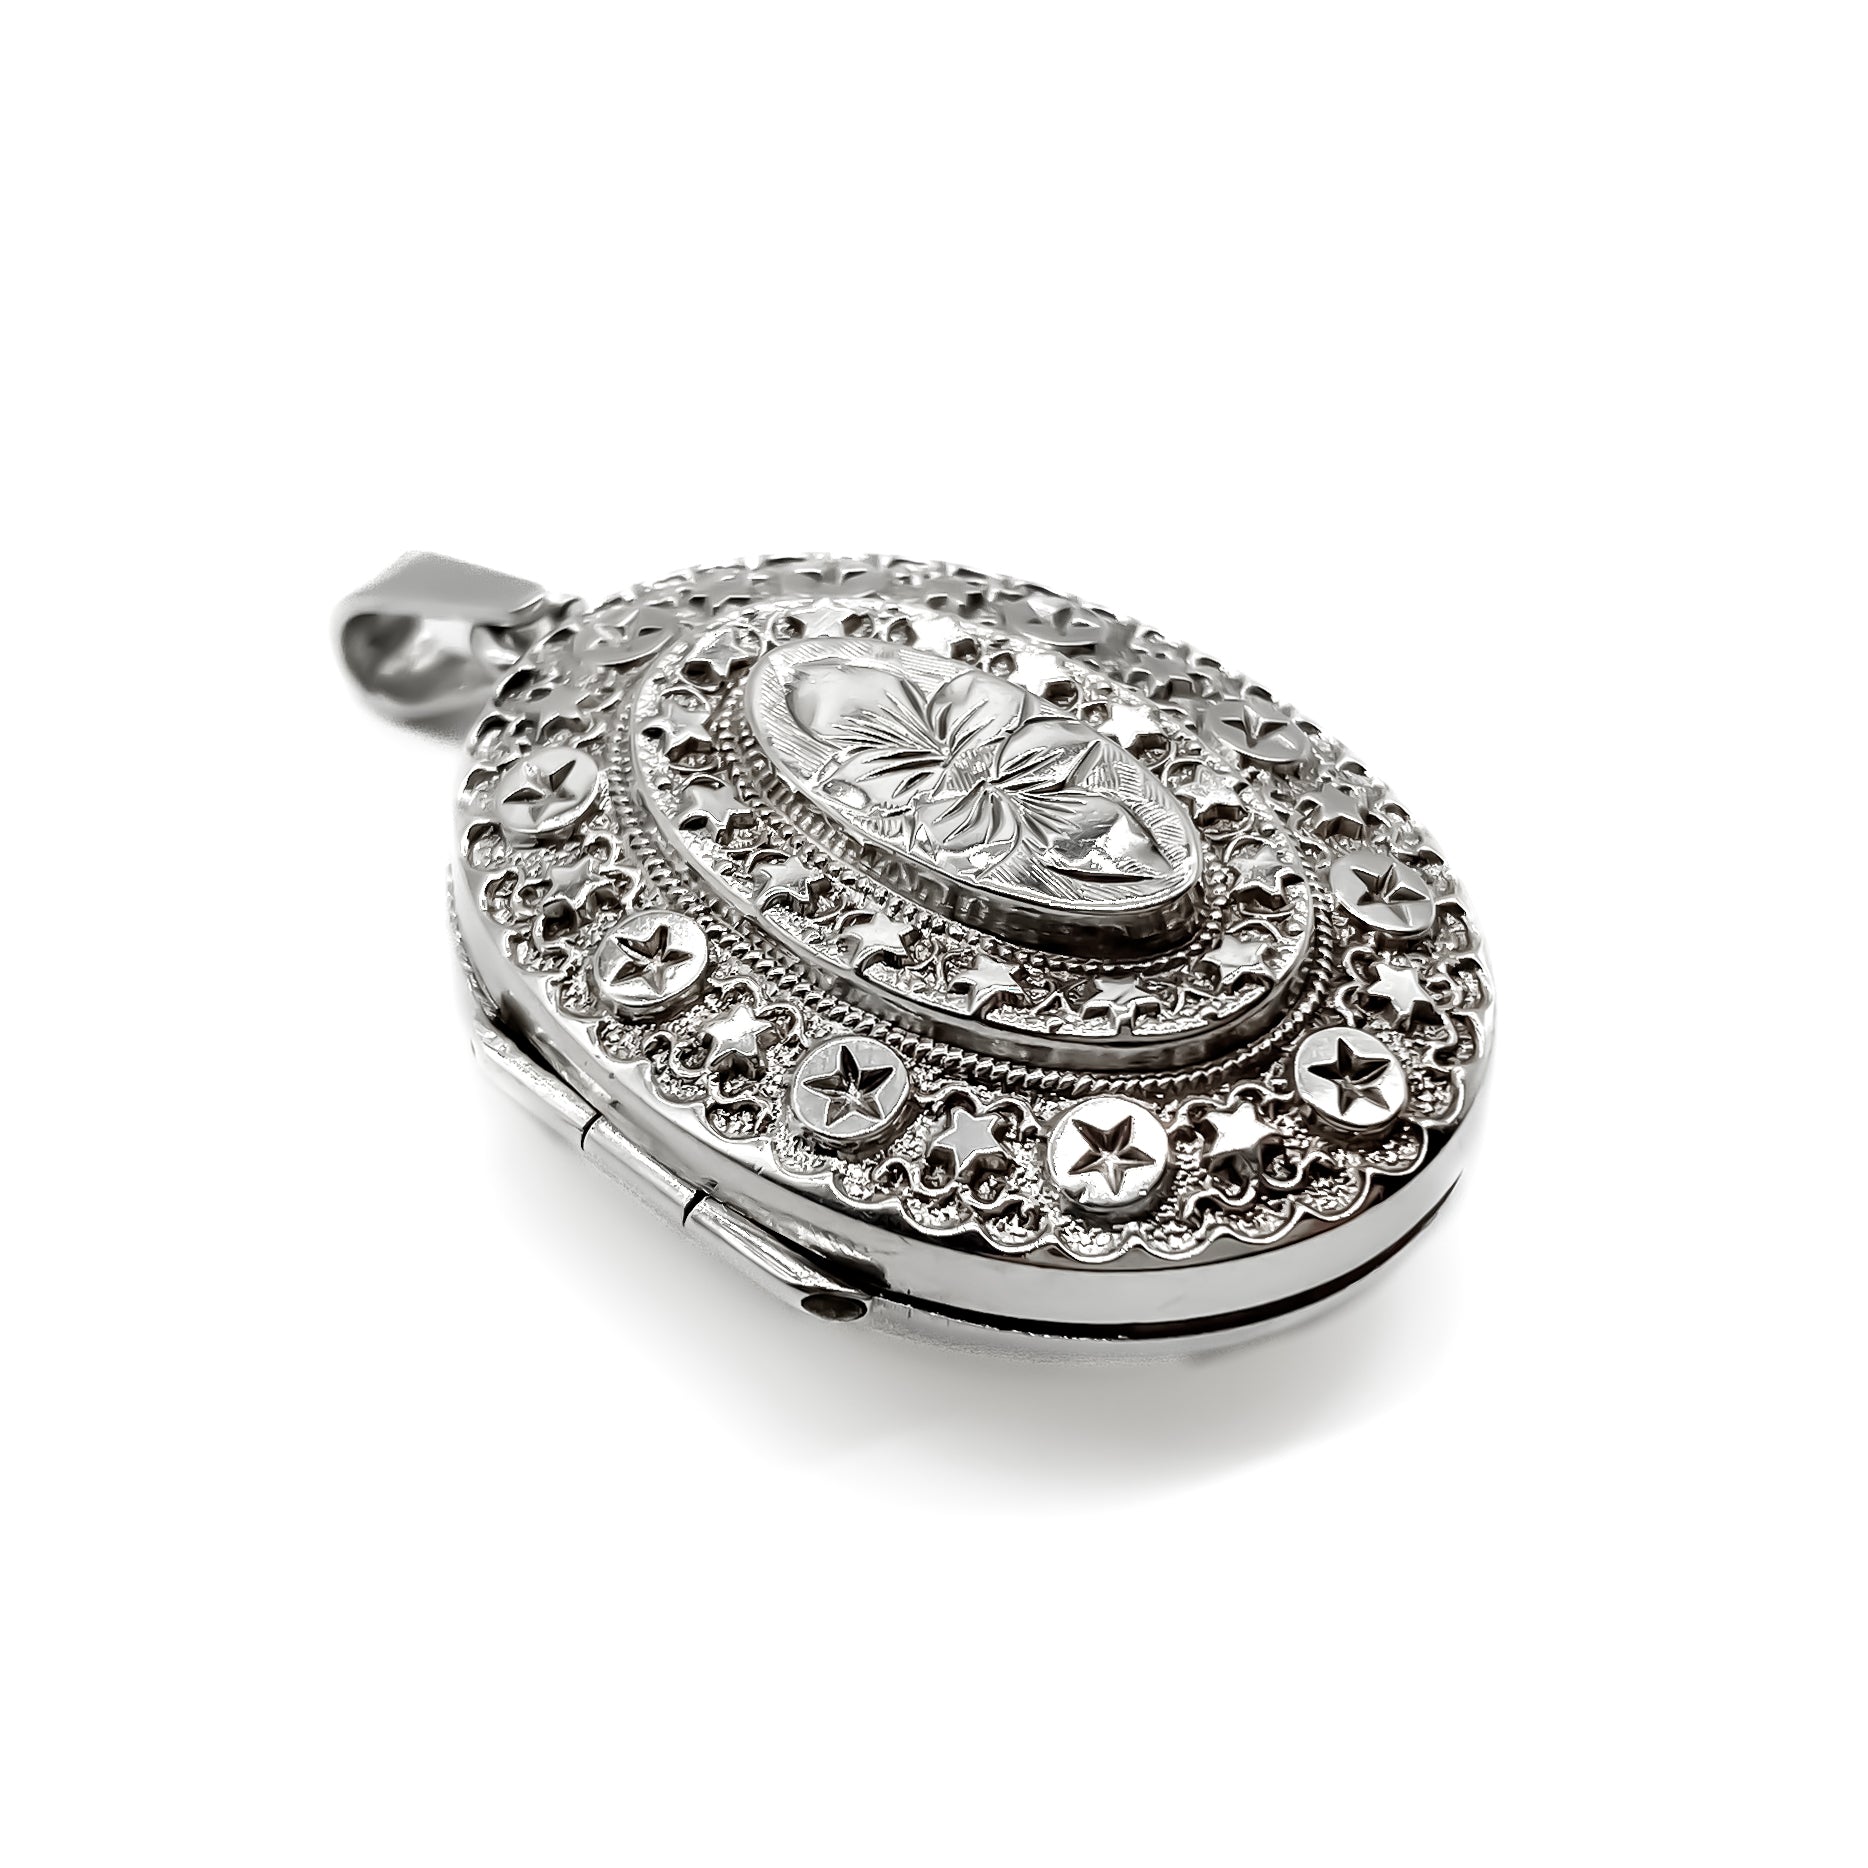 Very pretty ornate Victorian oval sterling silver locket.